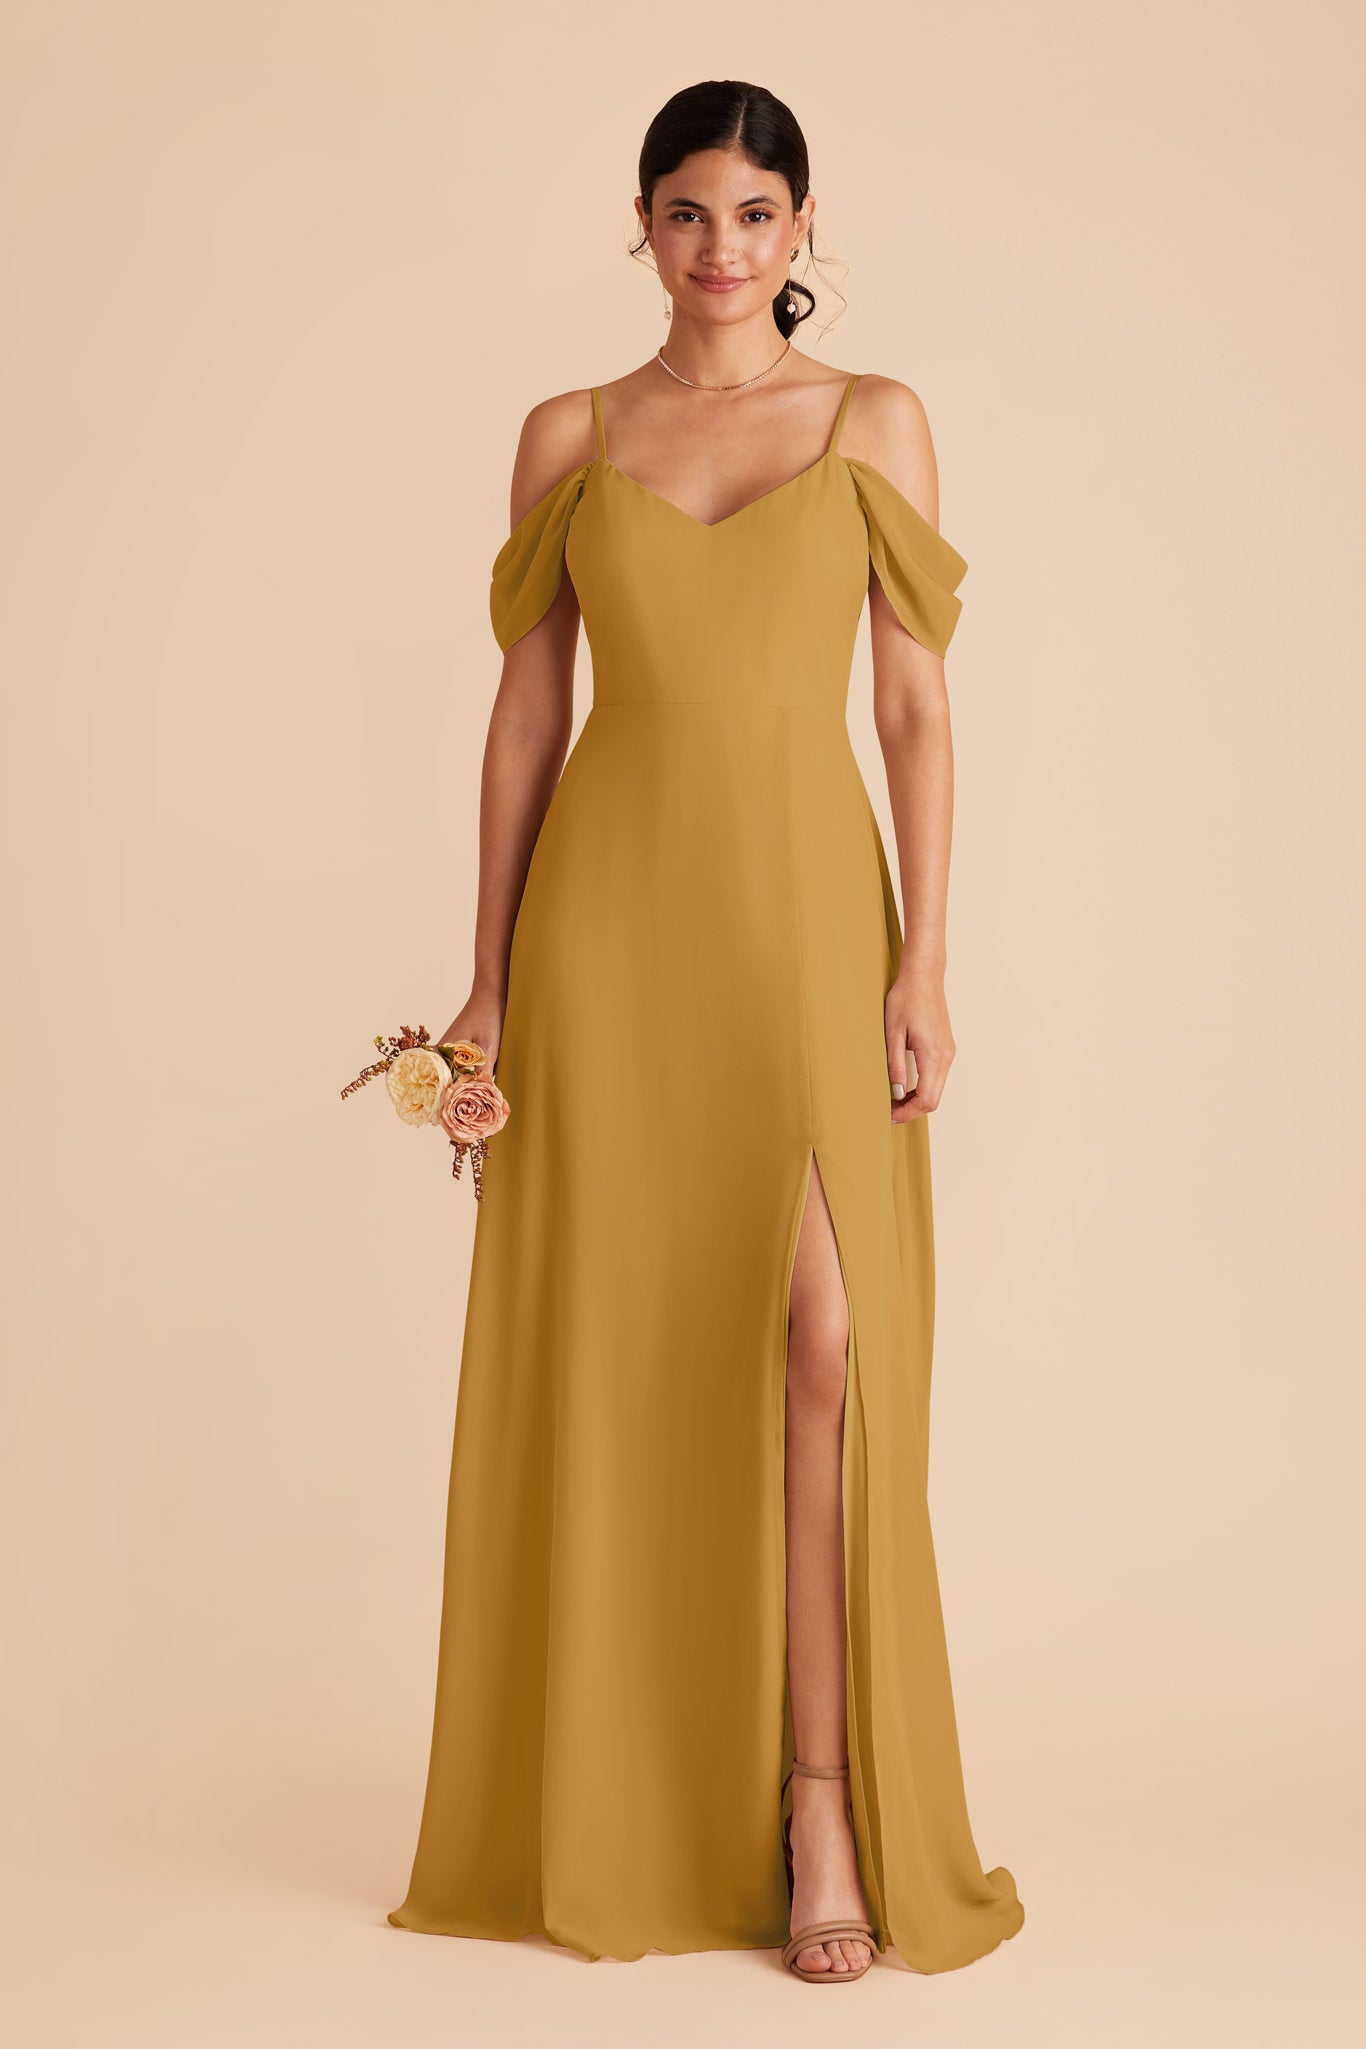 Marigold Devin Convertible Dress by Birdy Grey